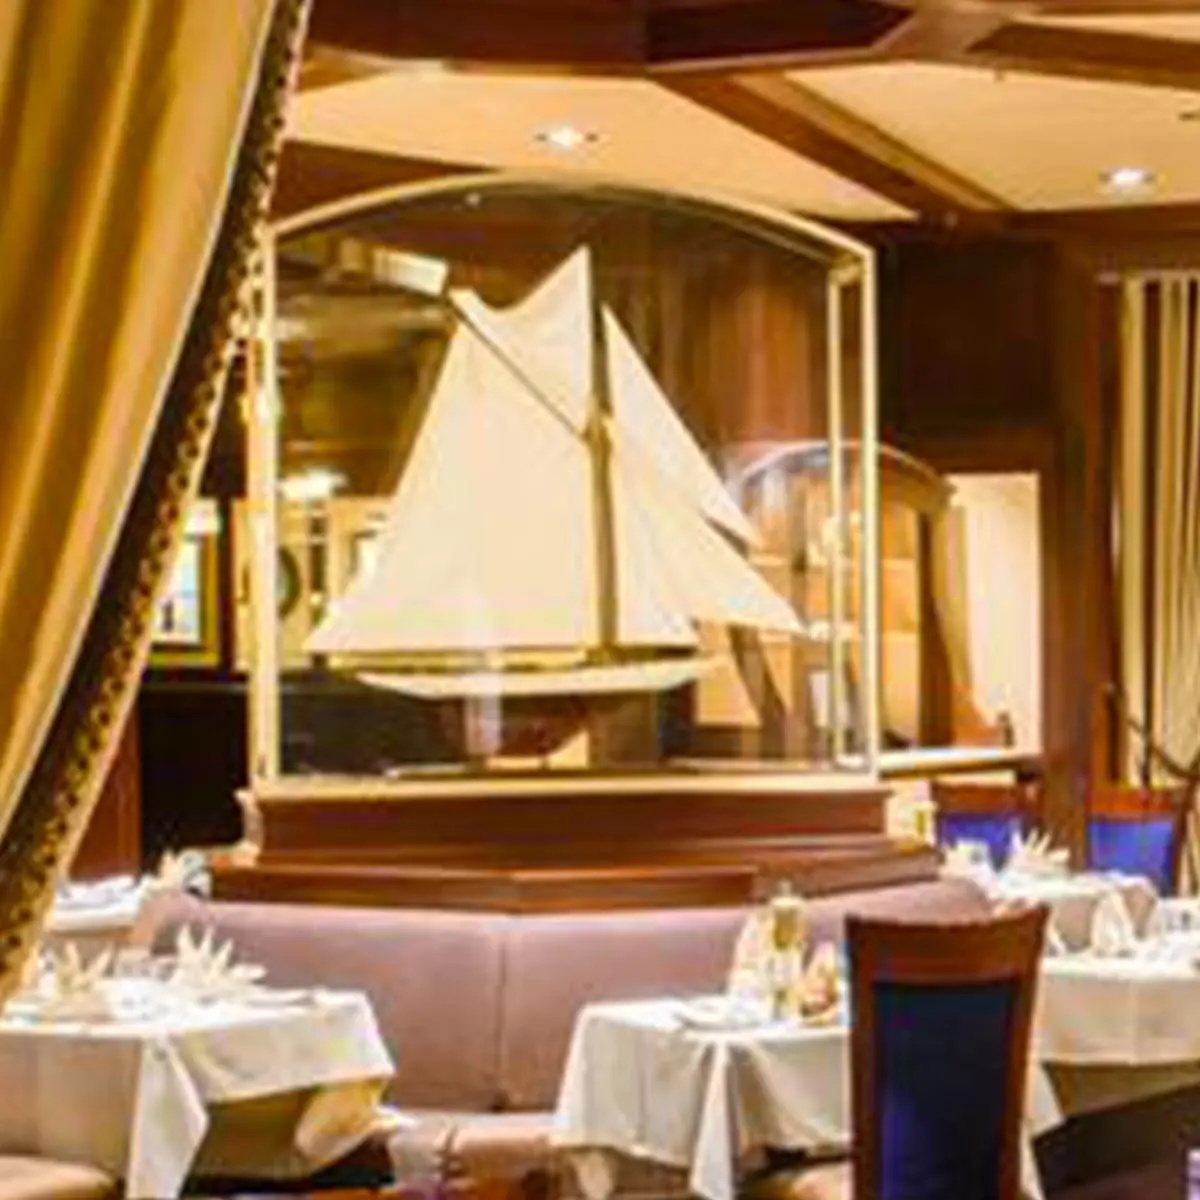 https://media.disneylandparis.com/d4th/it-it/images/n022728_2022aug30_world_restaurant-yacht-club-detail-boat_1-1_tcm764-224610.jpg?w=208